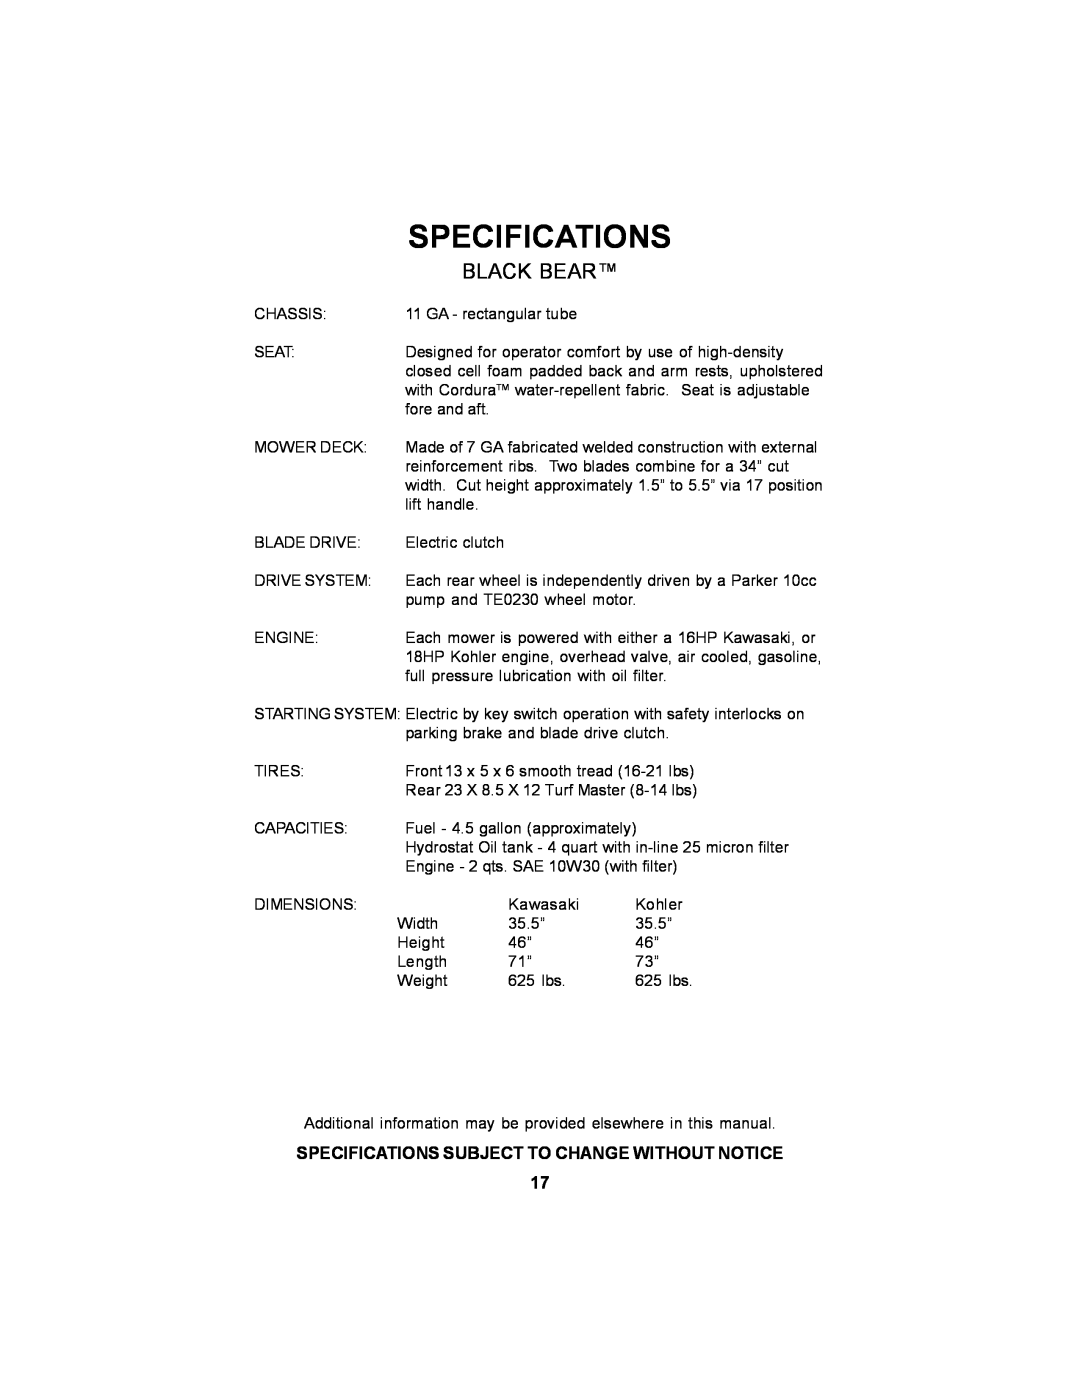 Dixon 11249-106 manual Specifications, Black Bear 